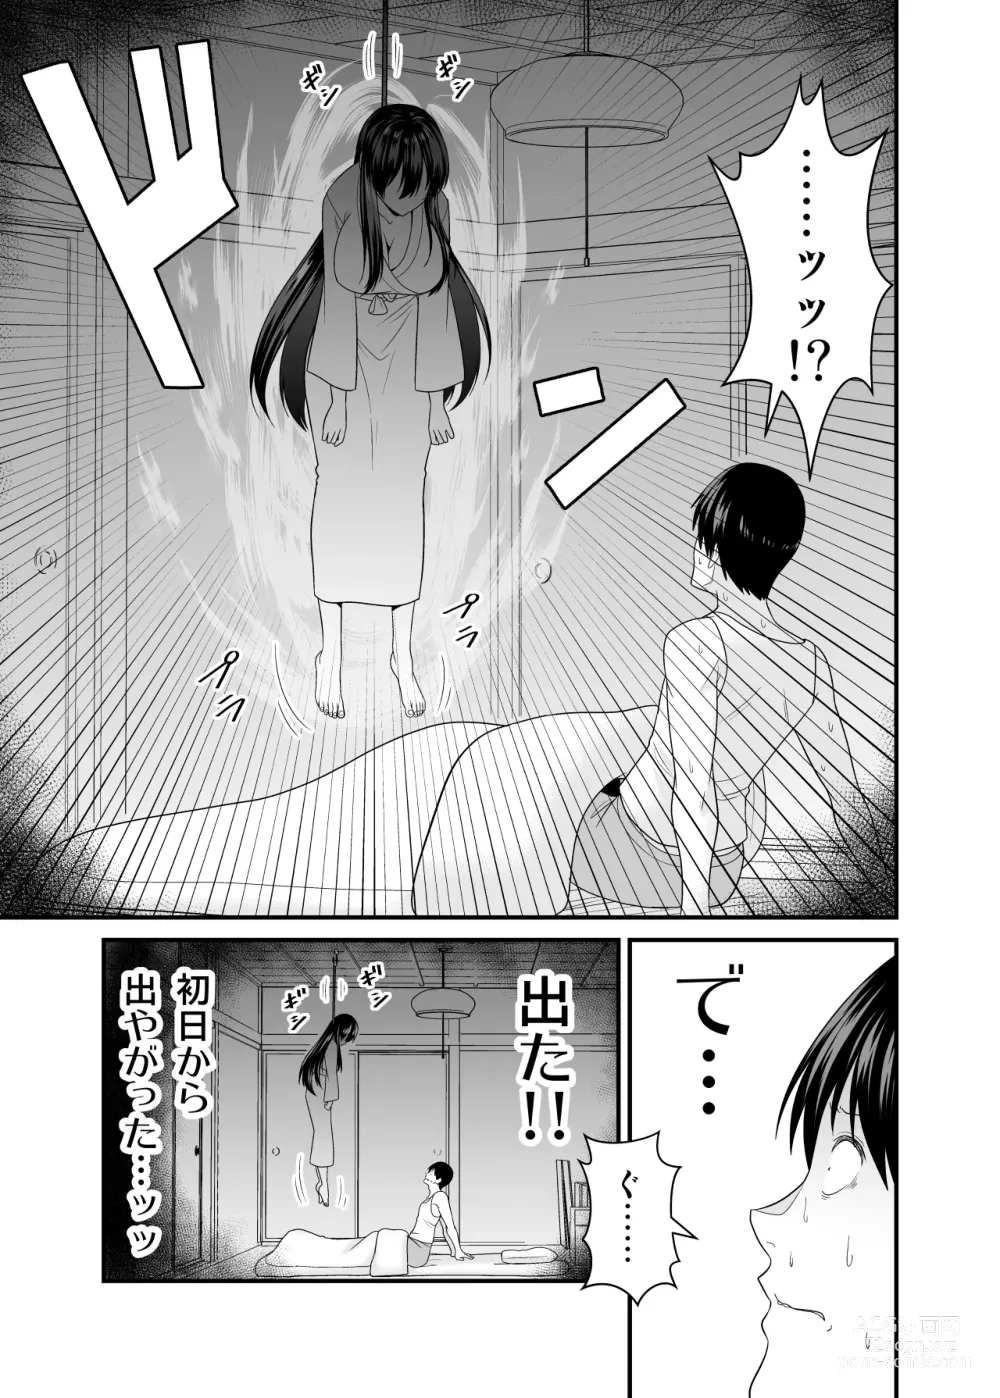 Page 8 of doujinshi ヤバい事故物件に女幽霊が出たけど無職底辺の俺はセックスしまくる